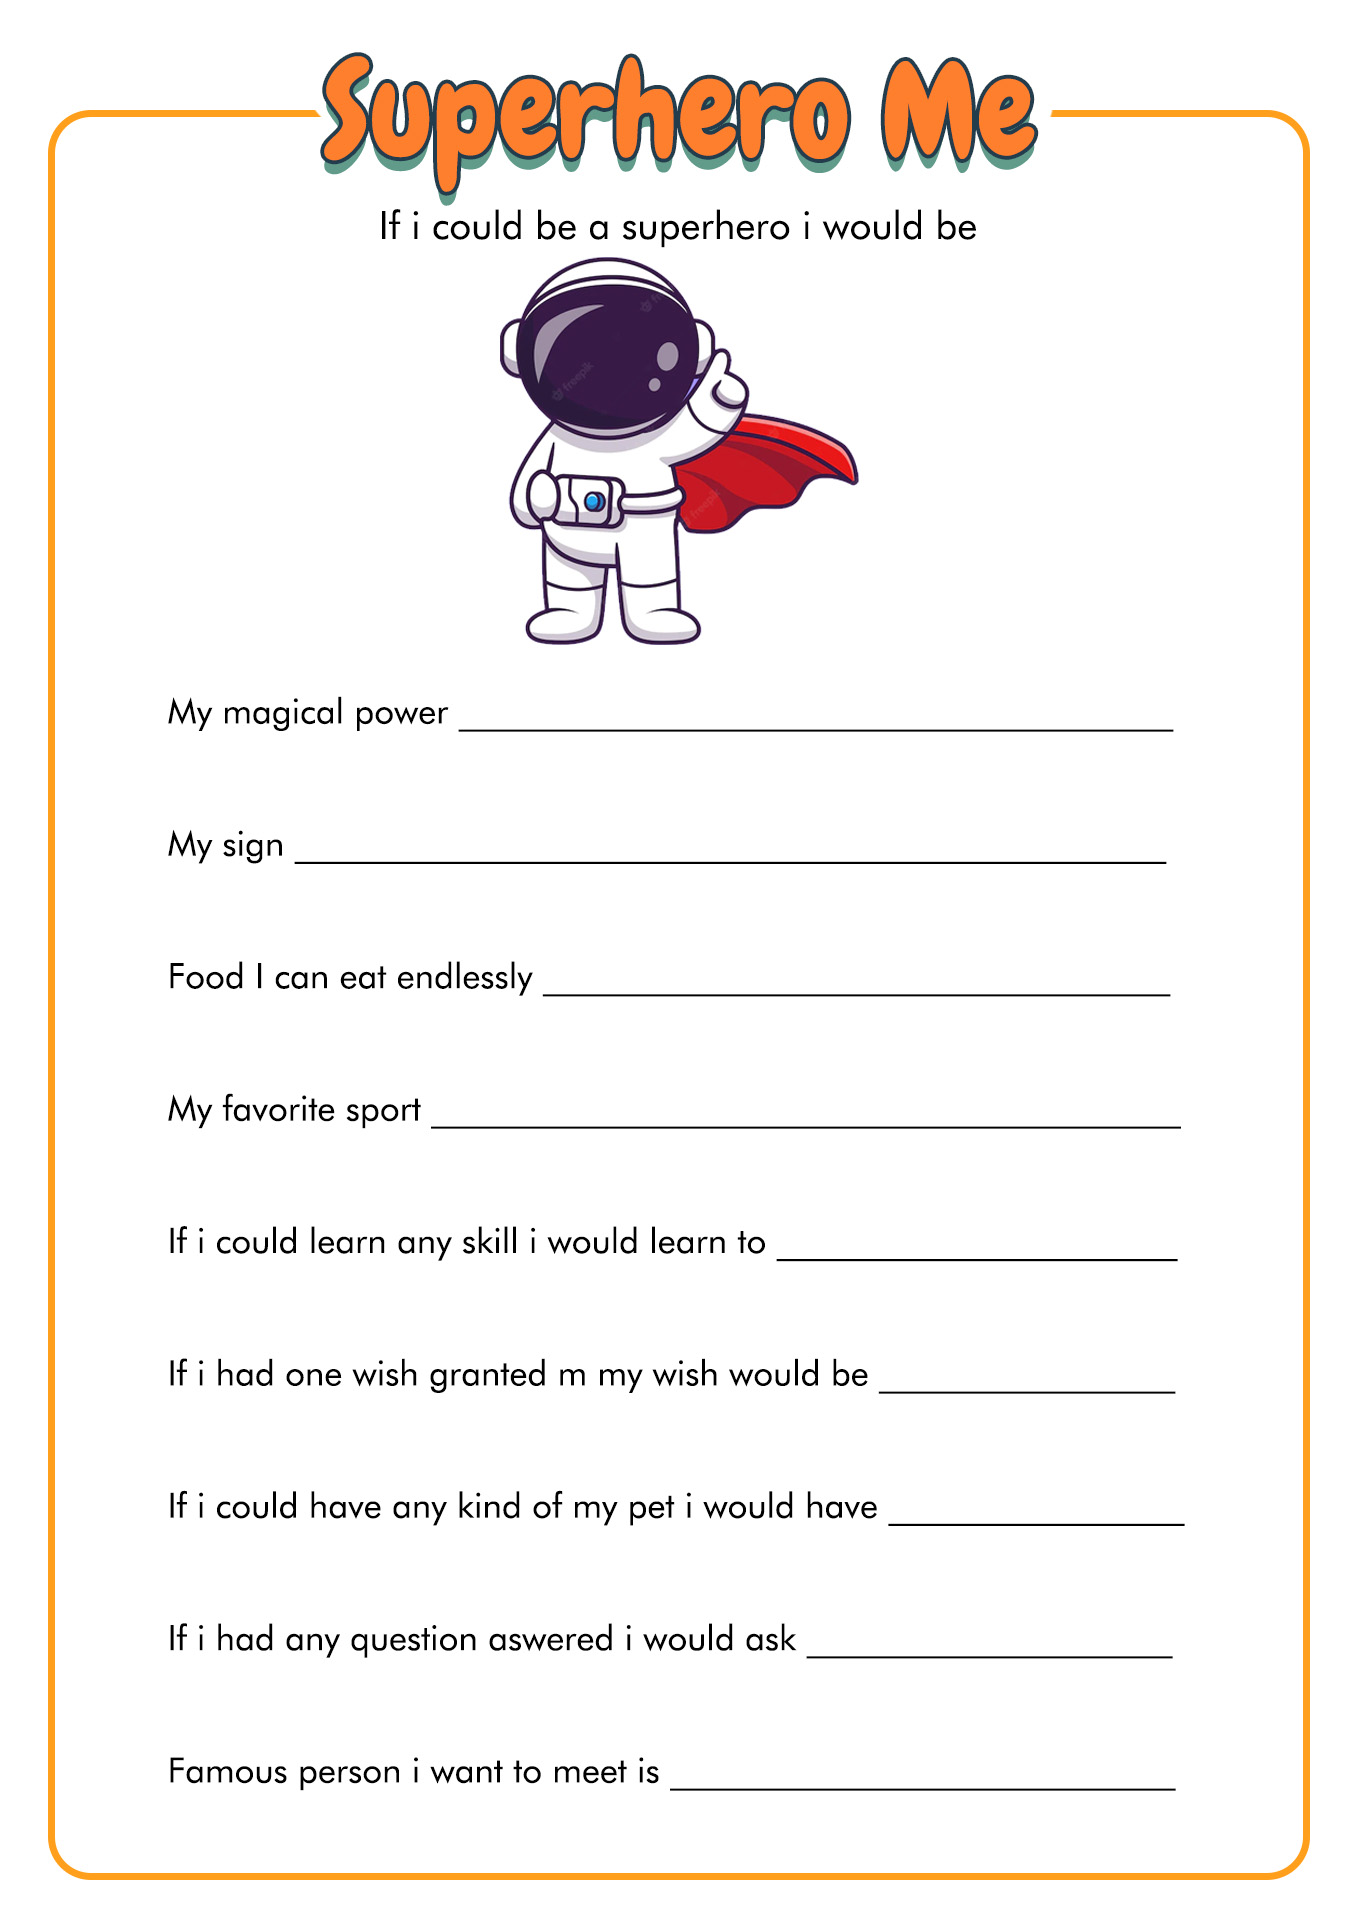 19 Best Images Of Superhero Classroom School Worksheets All About Me Superhero Superhero Math